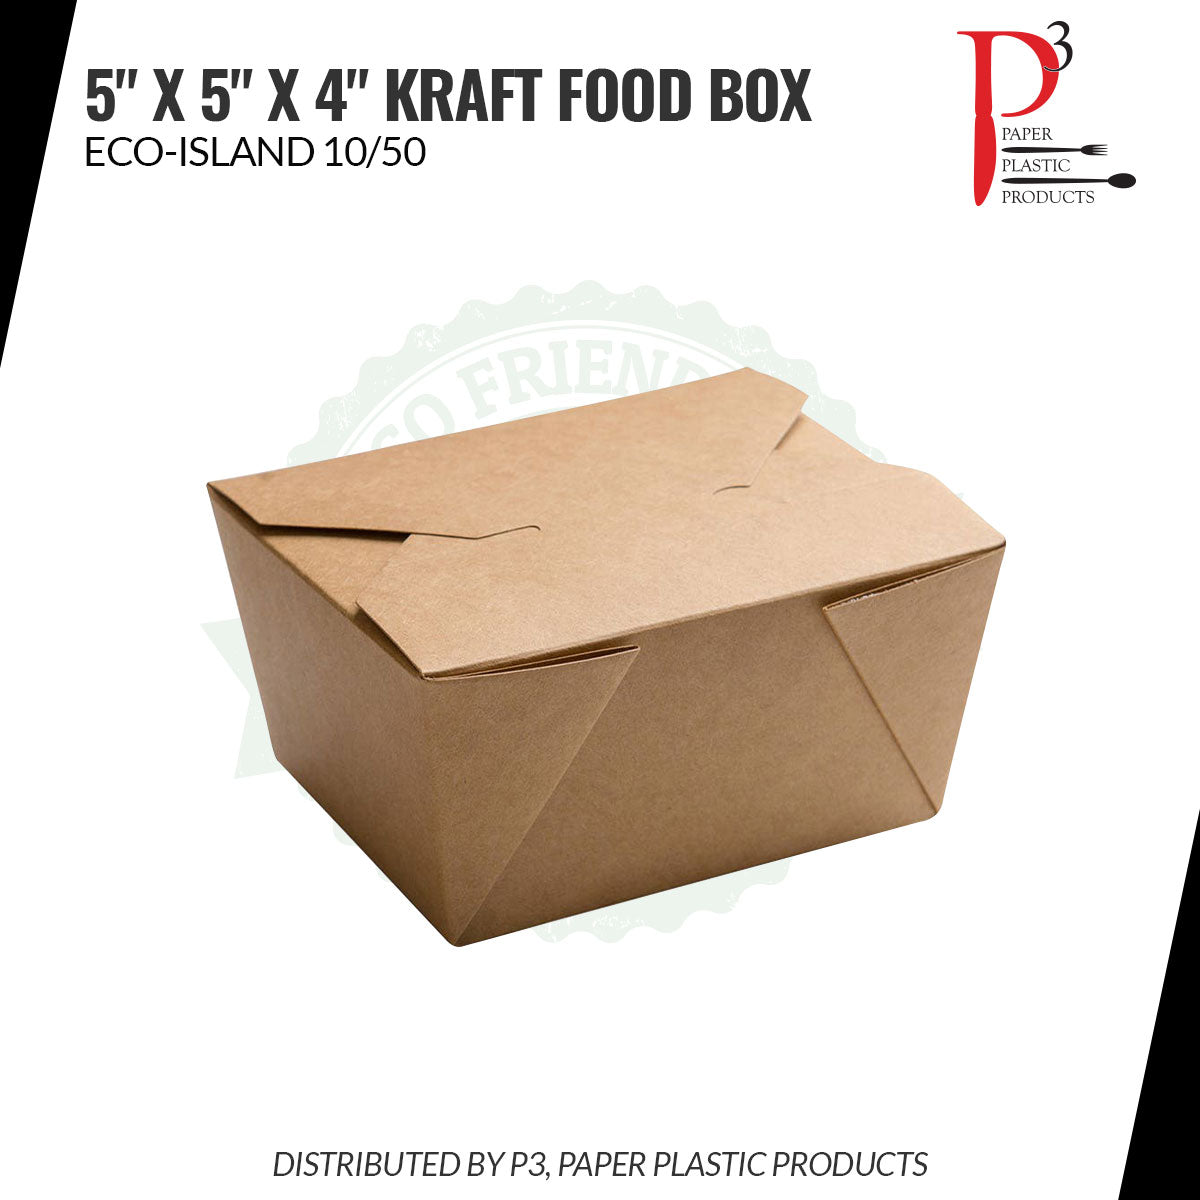 Kraft Food Box 5" x 5" x 4" Eco-Island 4/50